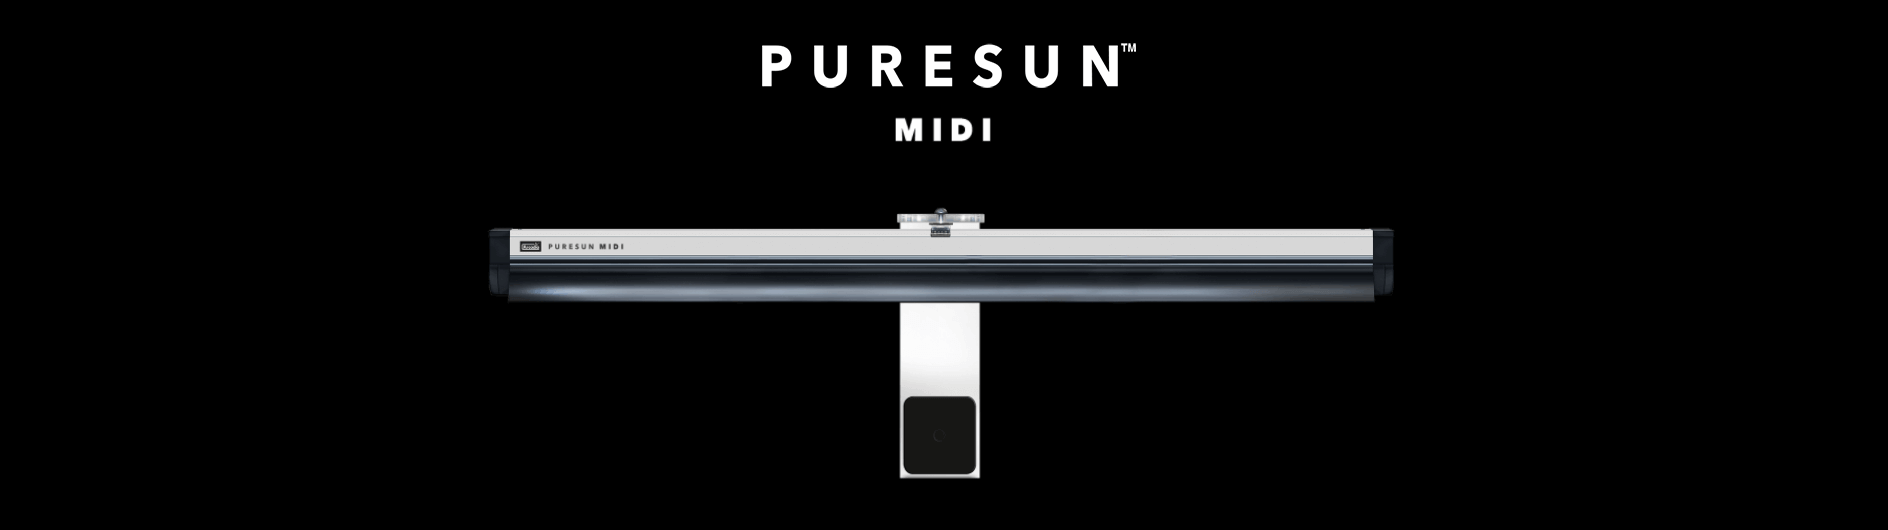 Puresun Midi Arcadia T5 14w